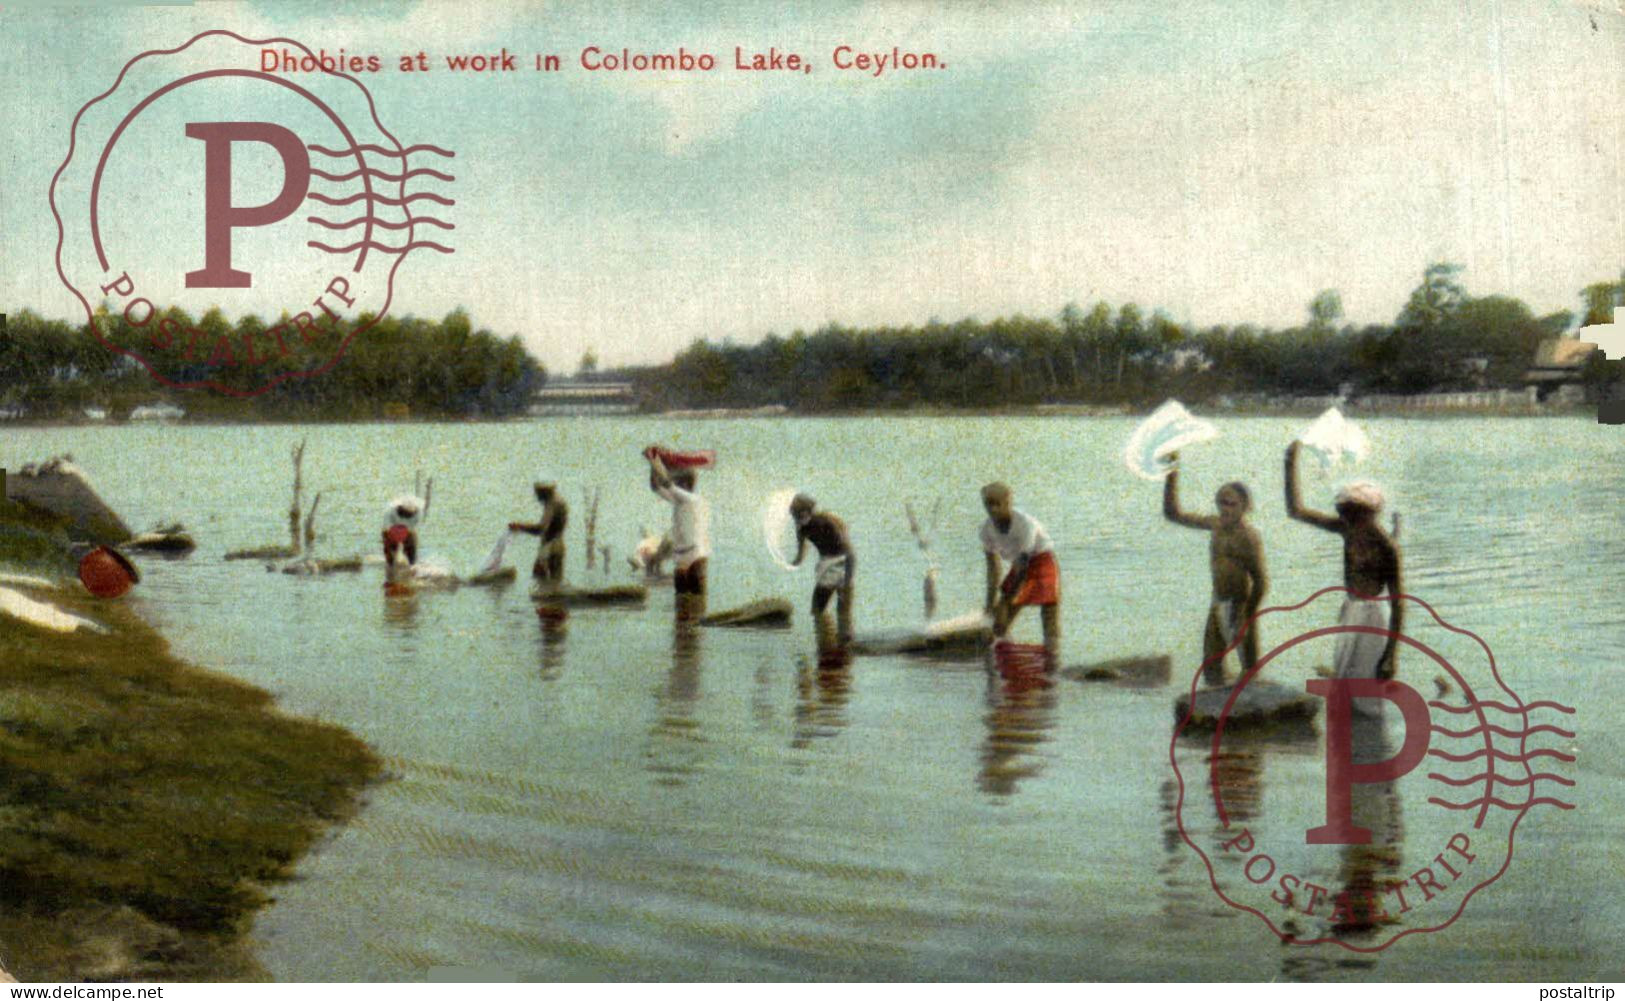 SRI LANKA CEYLON - CEYLAN. DHOBIES AT WORK IN COLOMBO - Sri Lanka (Ceylon)